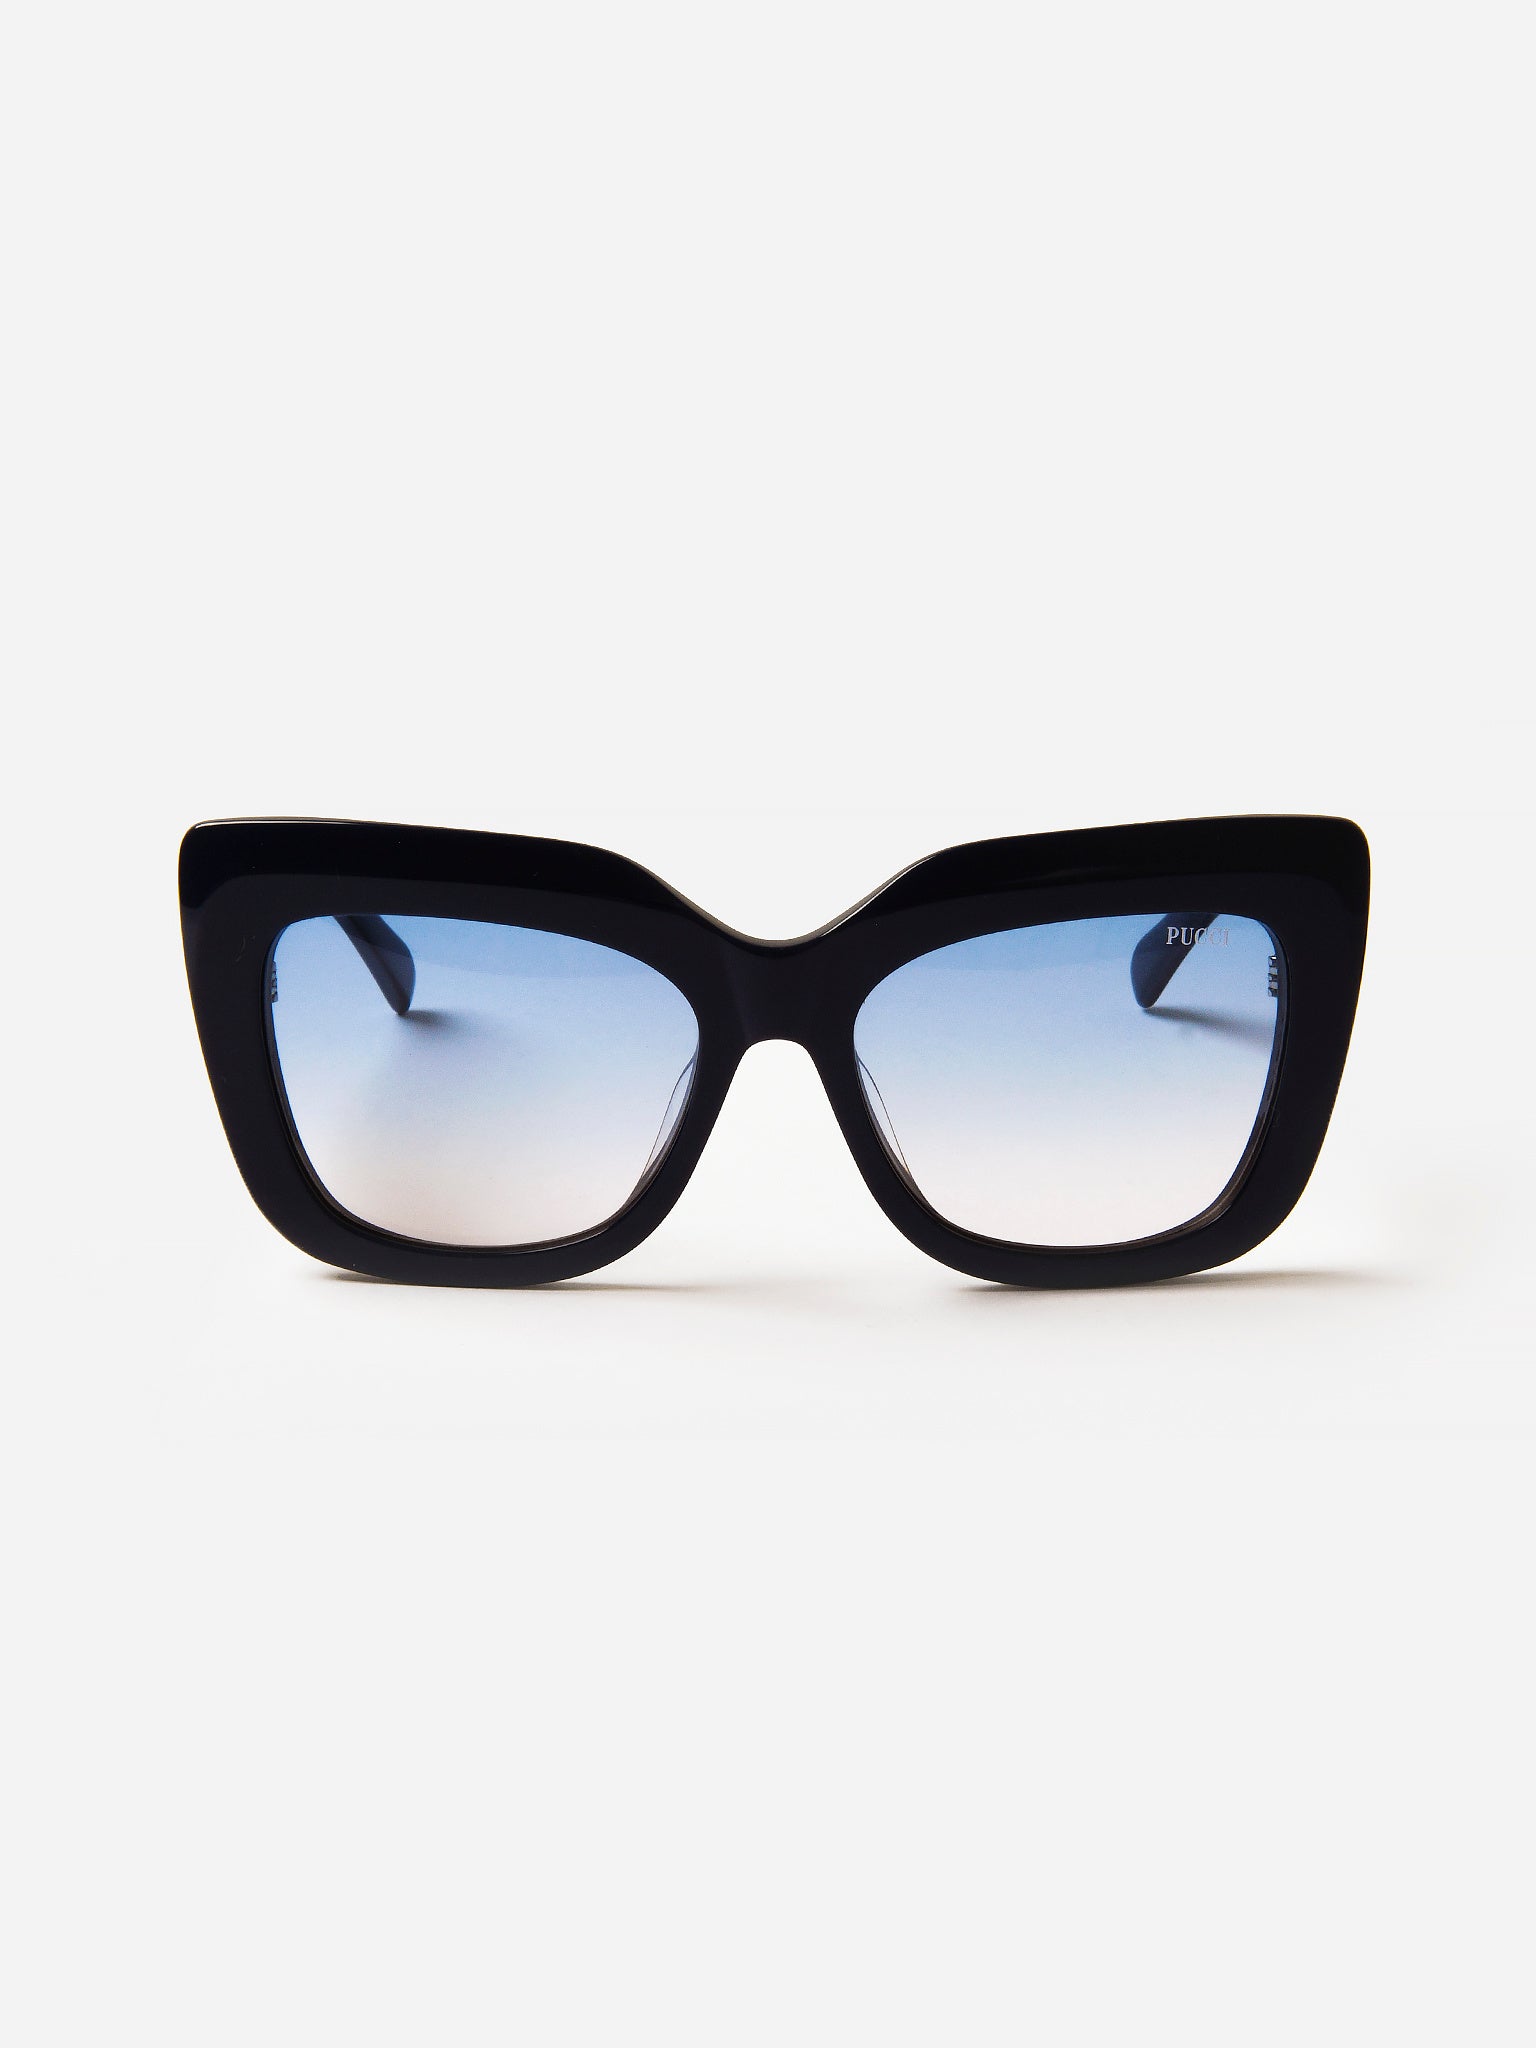 Emilio Pucci EP0166 Cat Eye Sunglasses